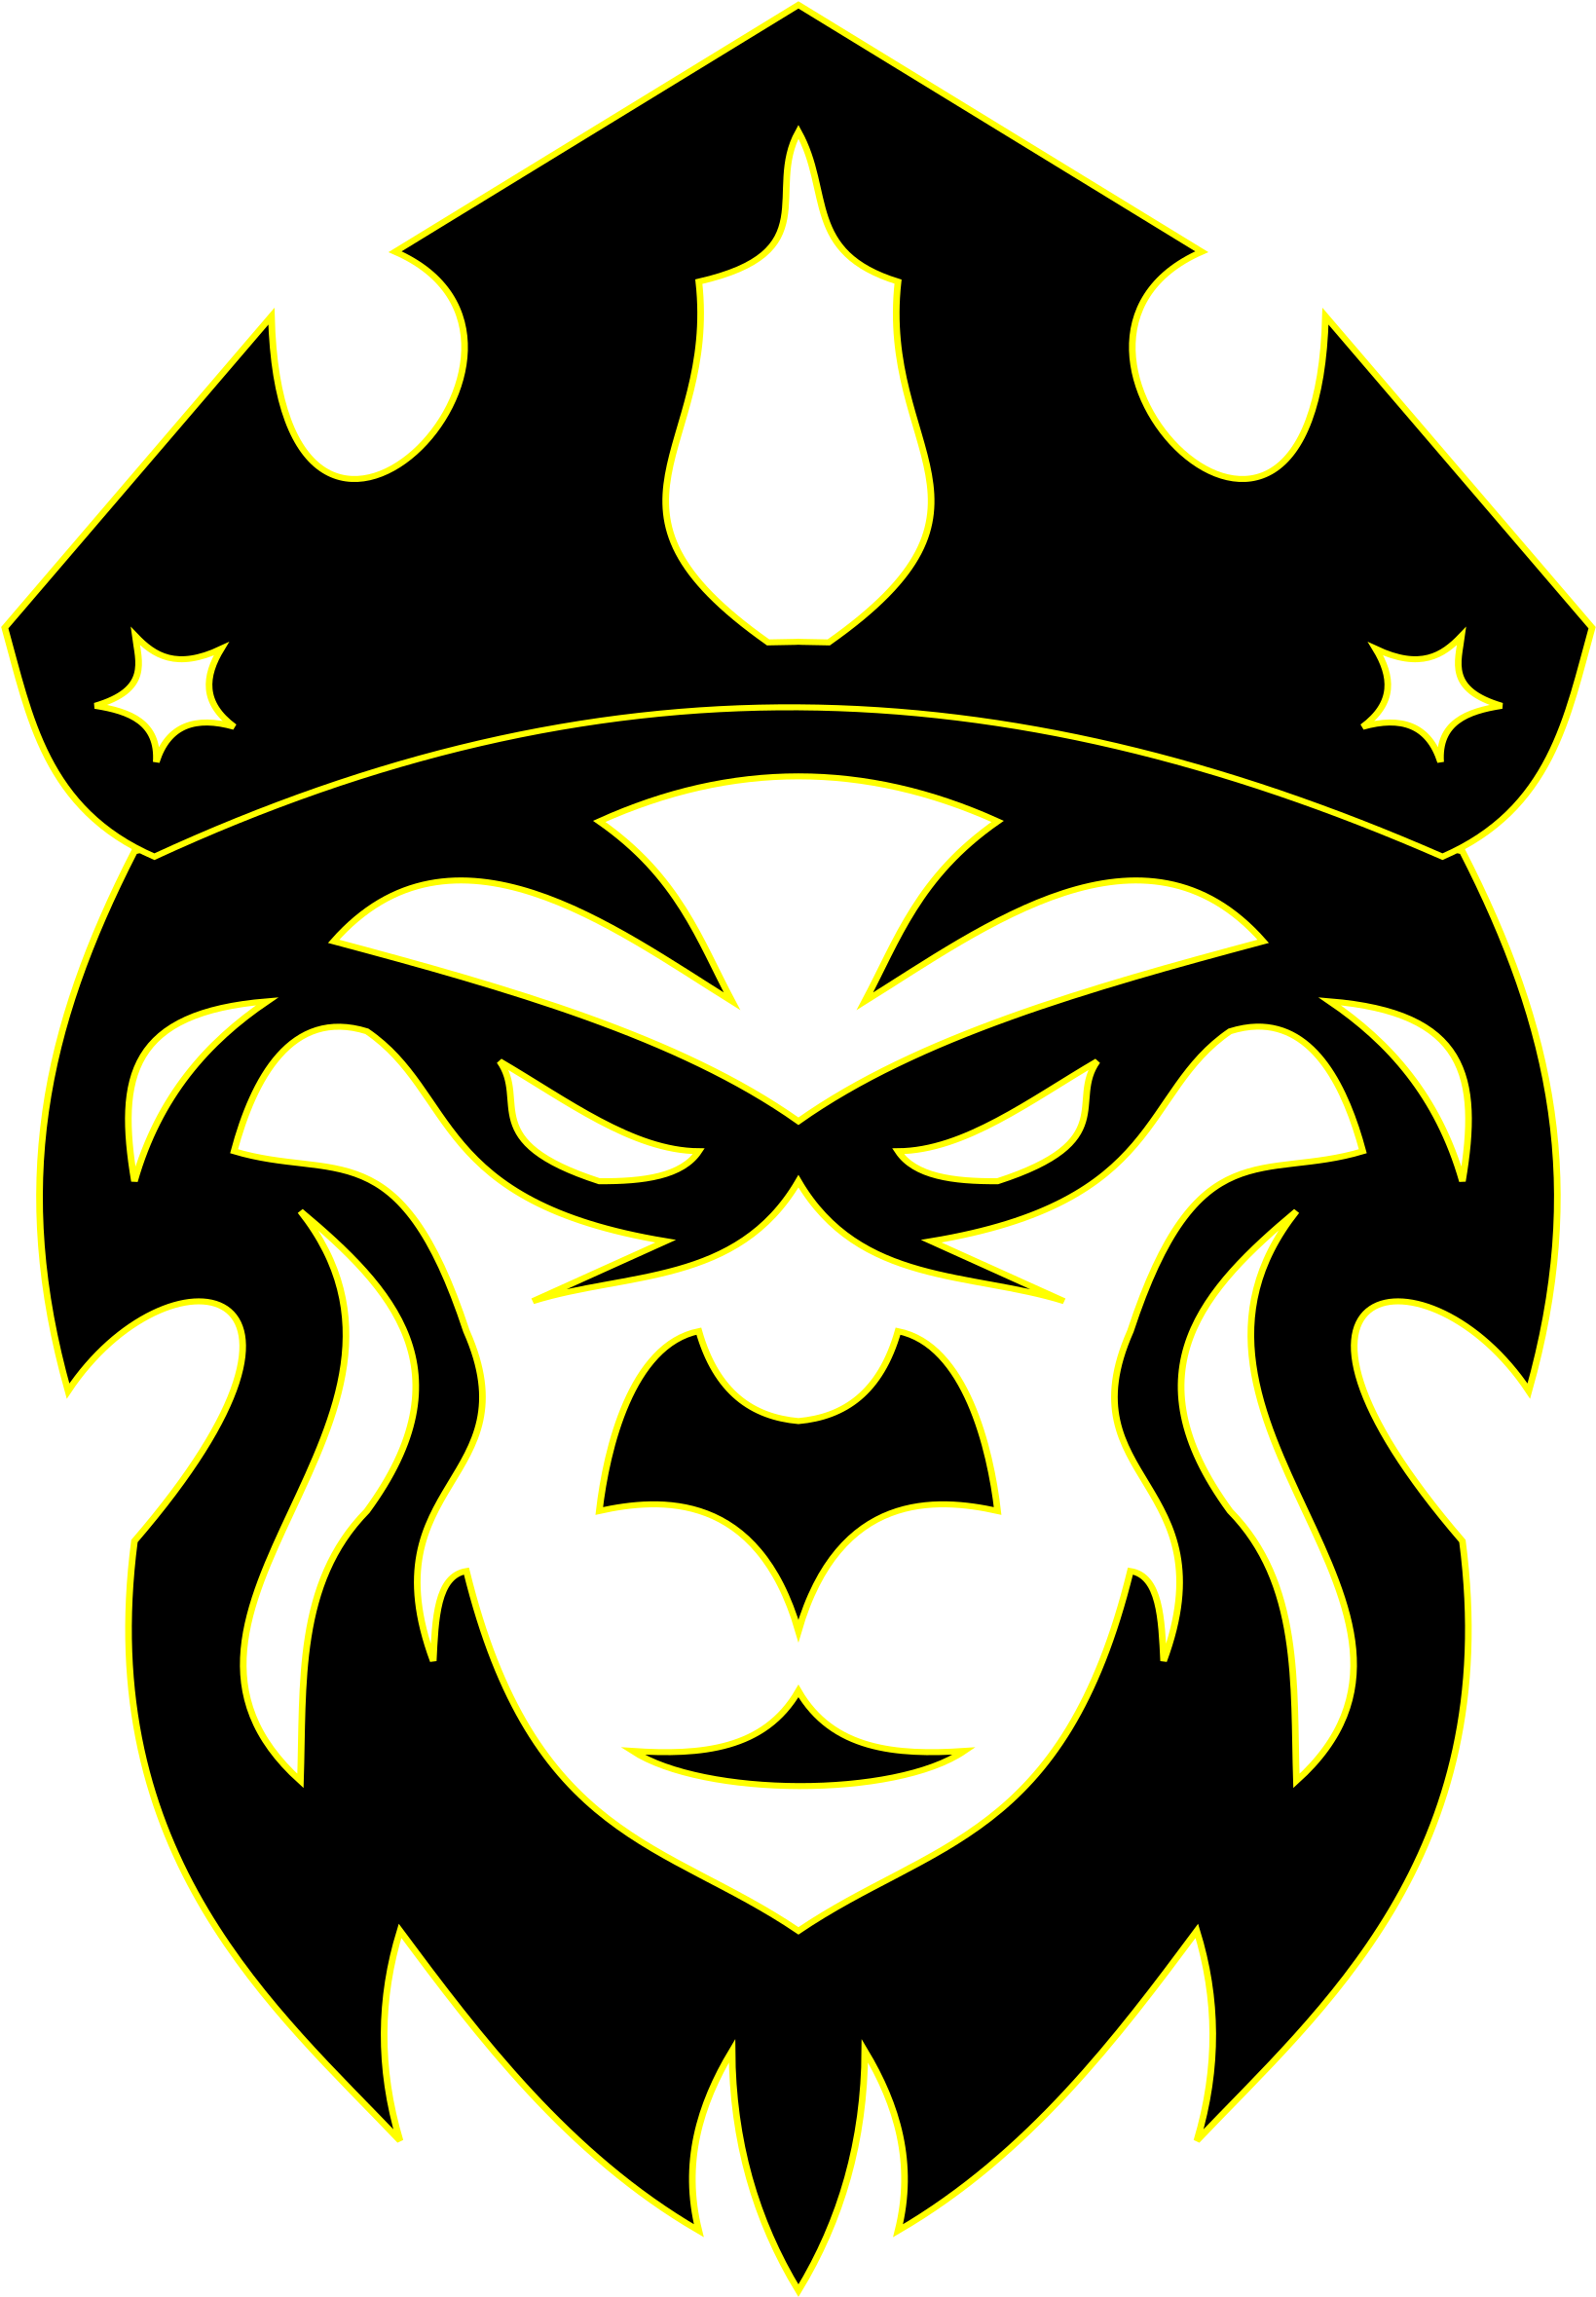 Big Image - Logo Kepala Singa Vektor (1697x2400)